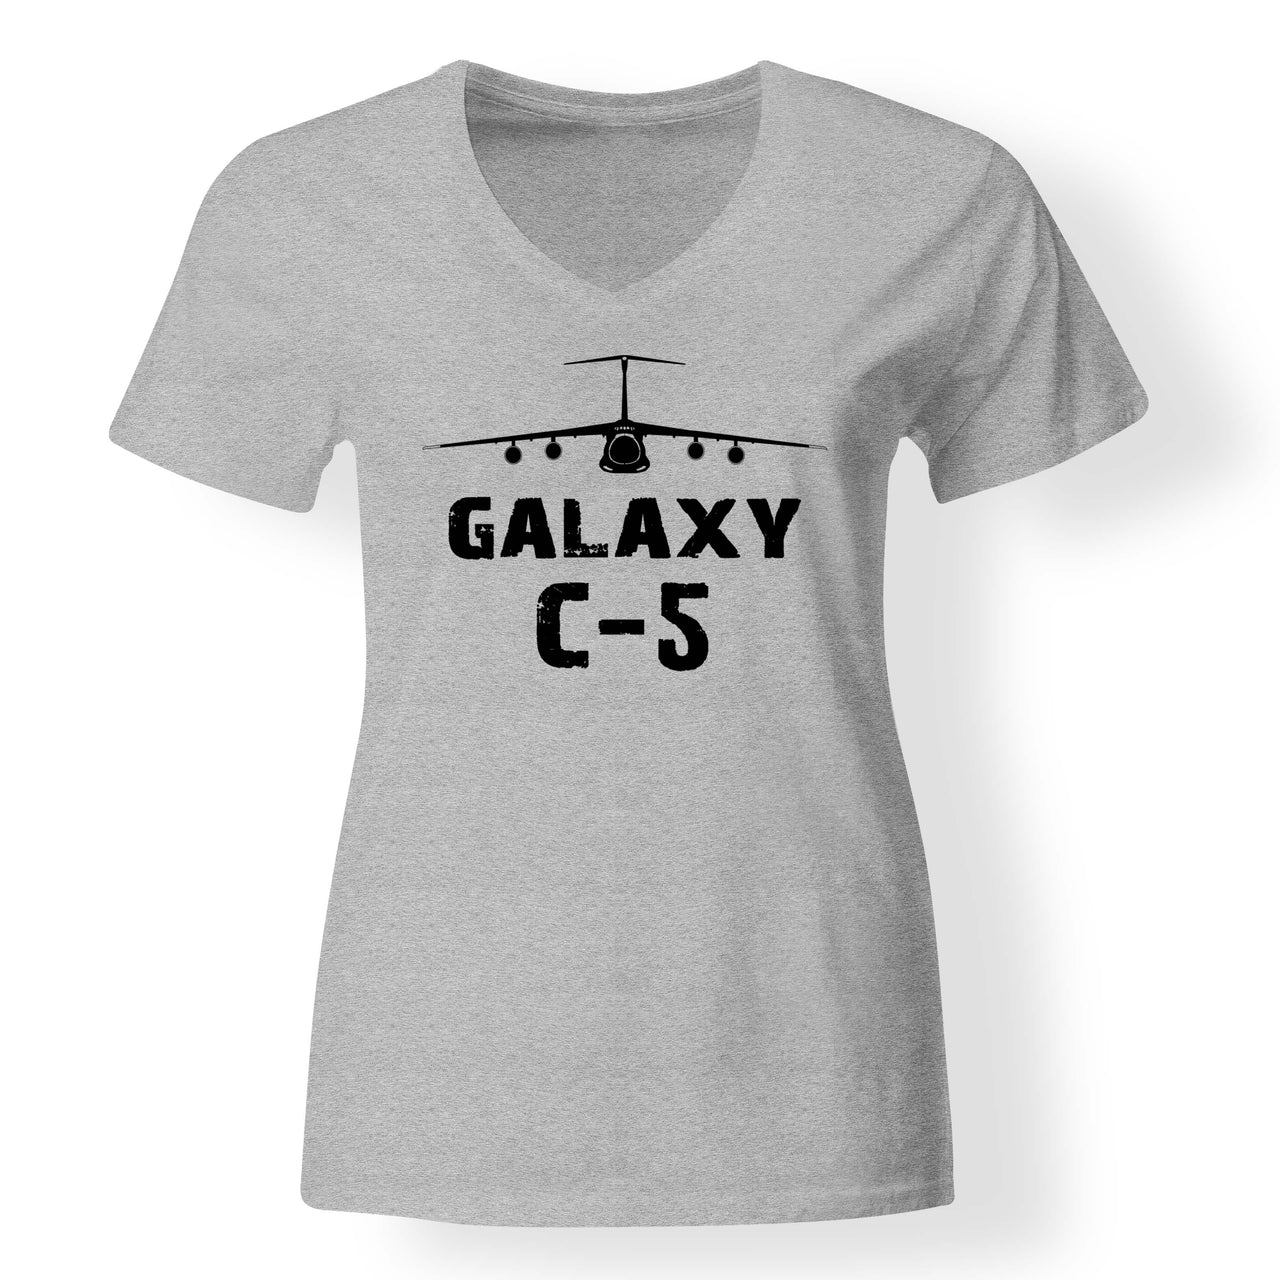 Galaxy C-5 & Plane Designed V-Neck T-Shirts